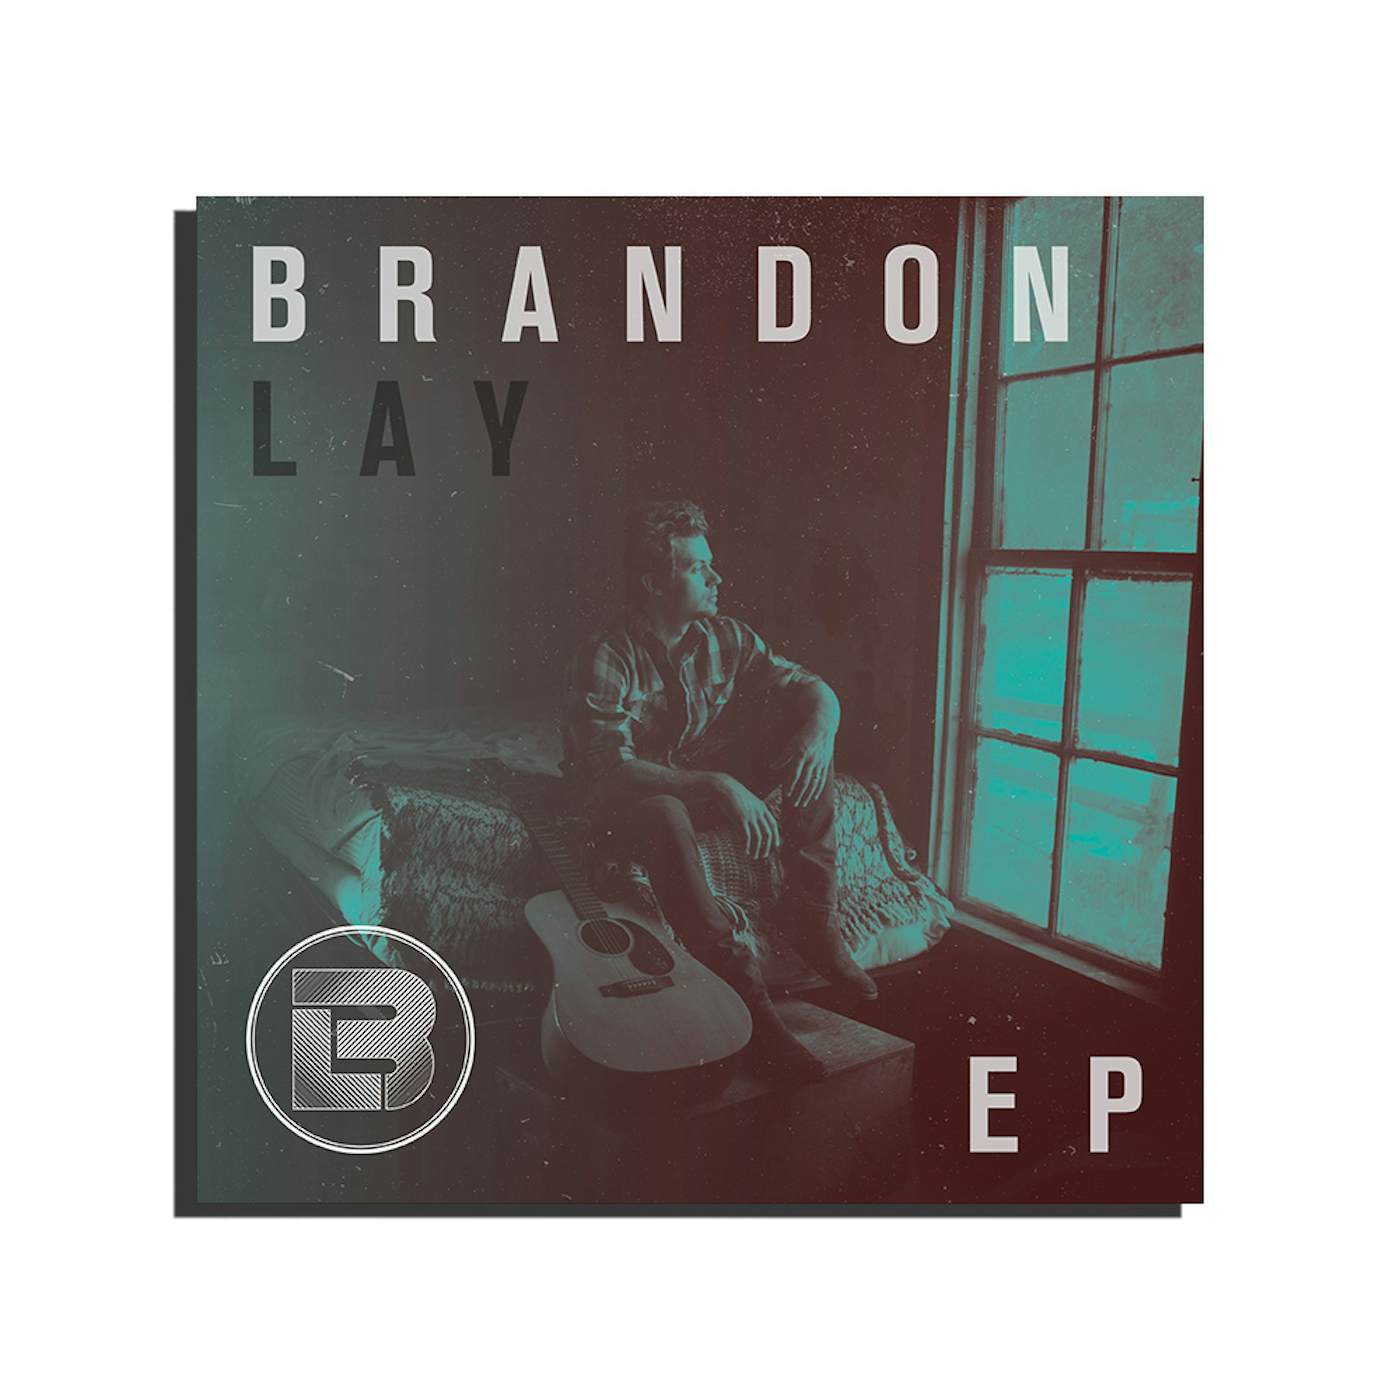 Brandon Lay EP